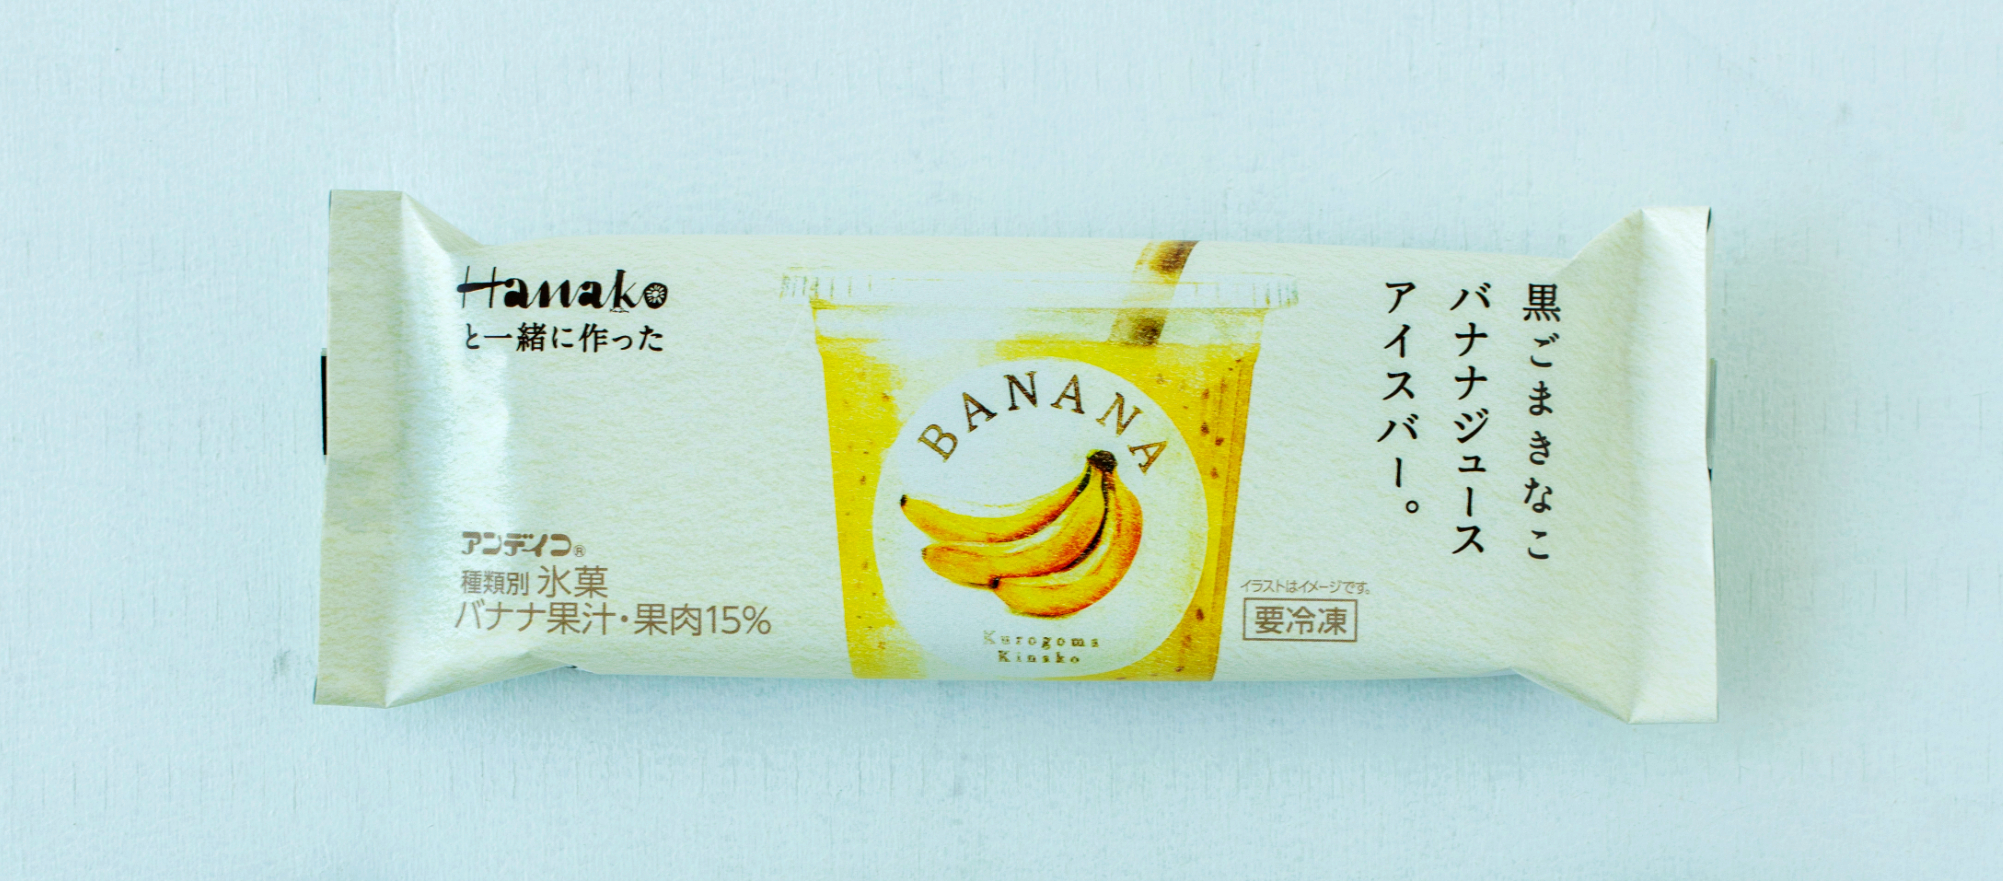 Hanakoコラボアイス 待望の第3弾 黒ごまきなこバナナジュースアイスバー が4 7より新発売 Food Hanako Tokyo